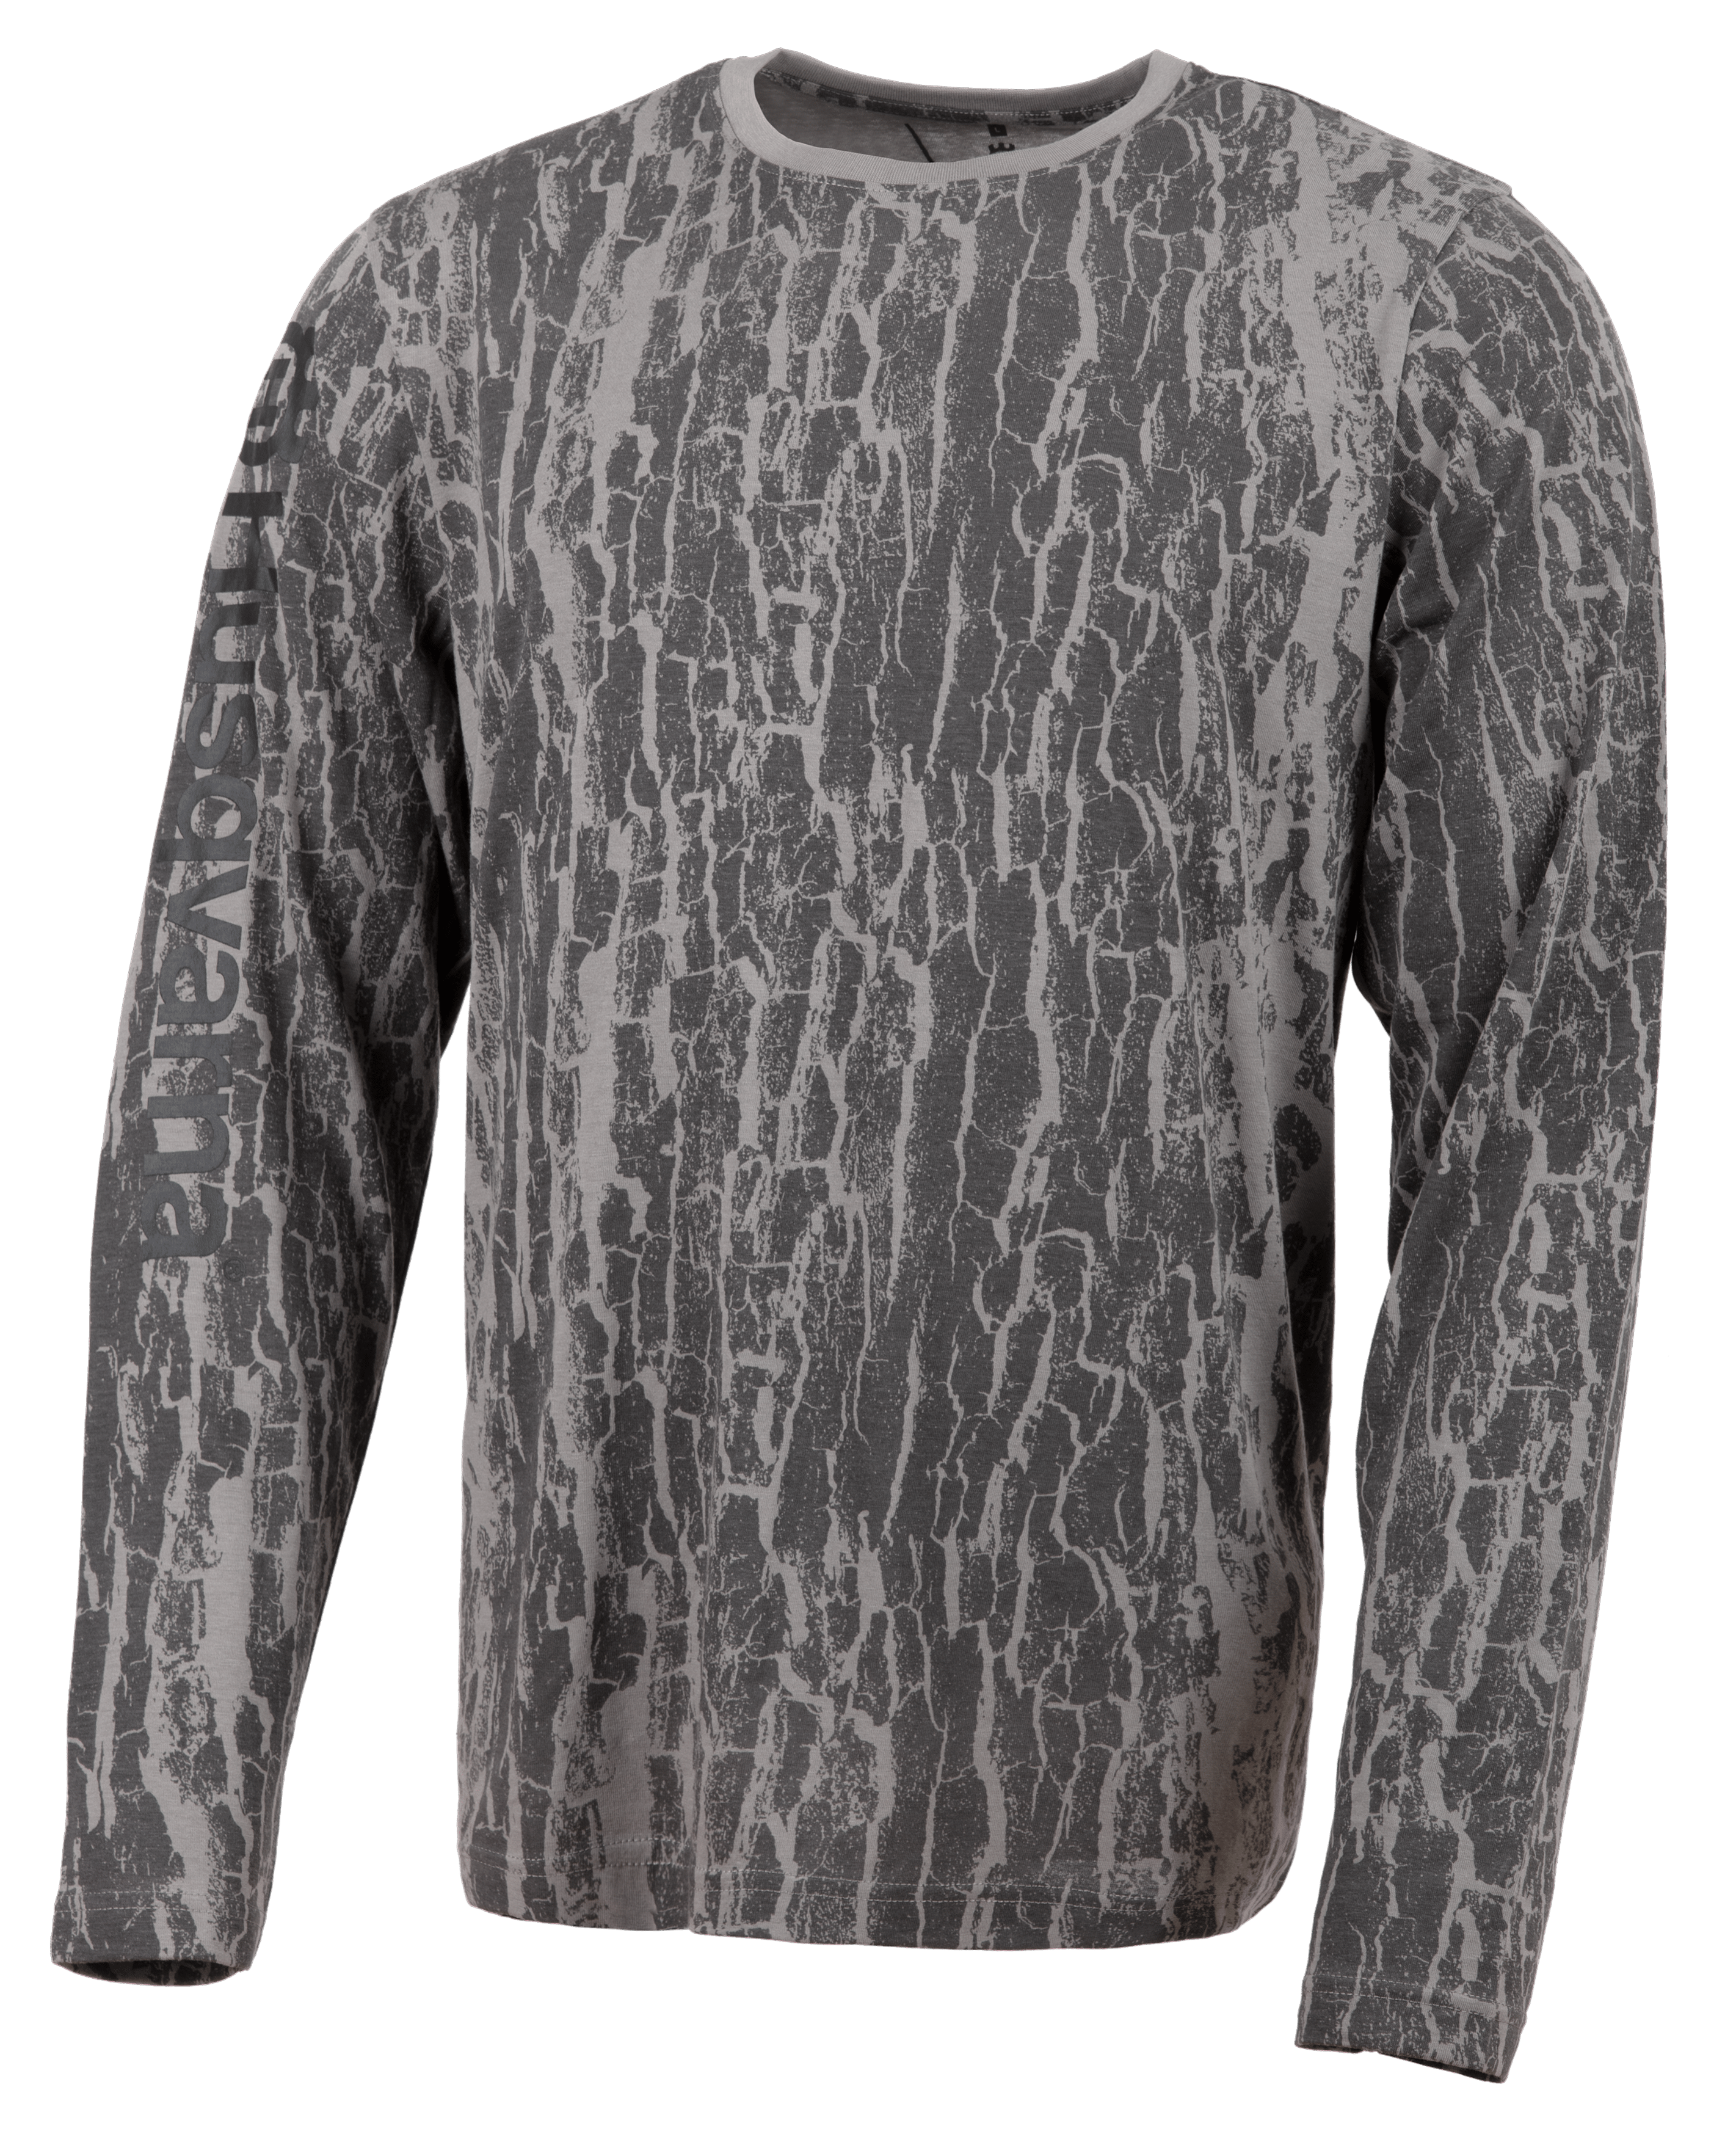 Xplorer T-shirt long sleeved unisex, Bark camo image 0